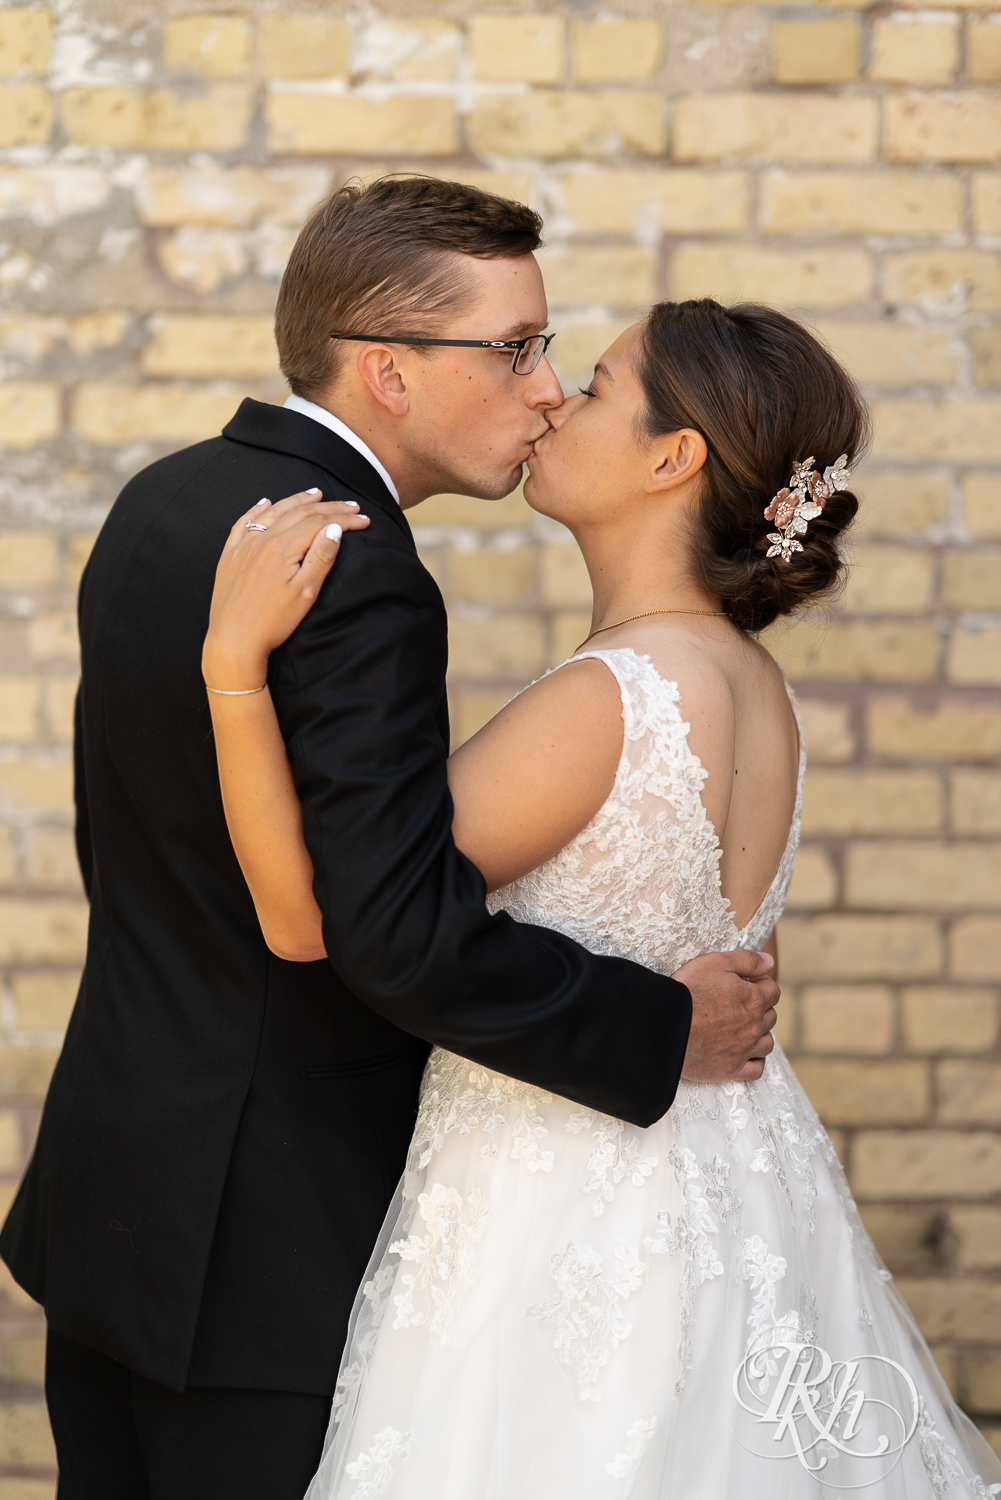 Bride and groom kiss at Kellerman's Event Center in White Bear Lake, Minnesota.